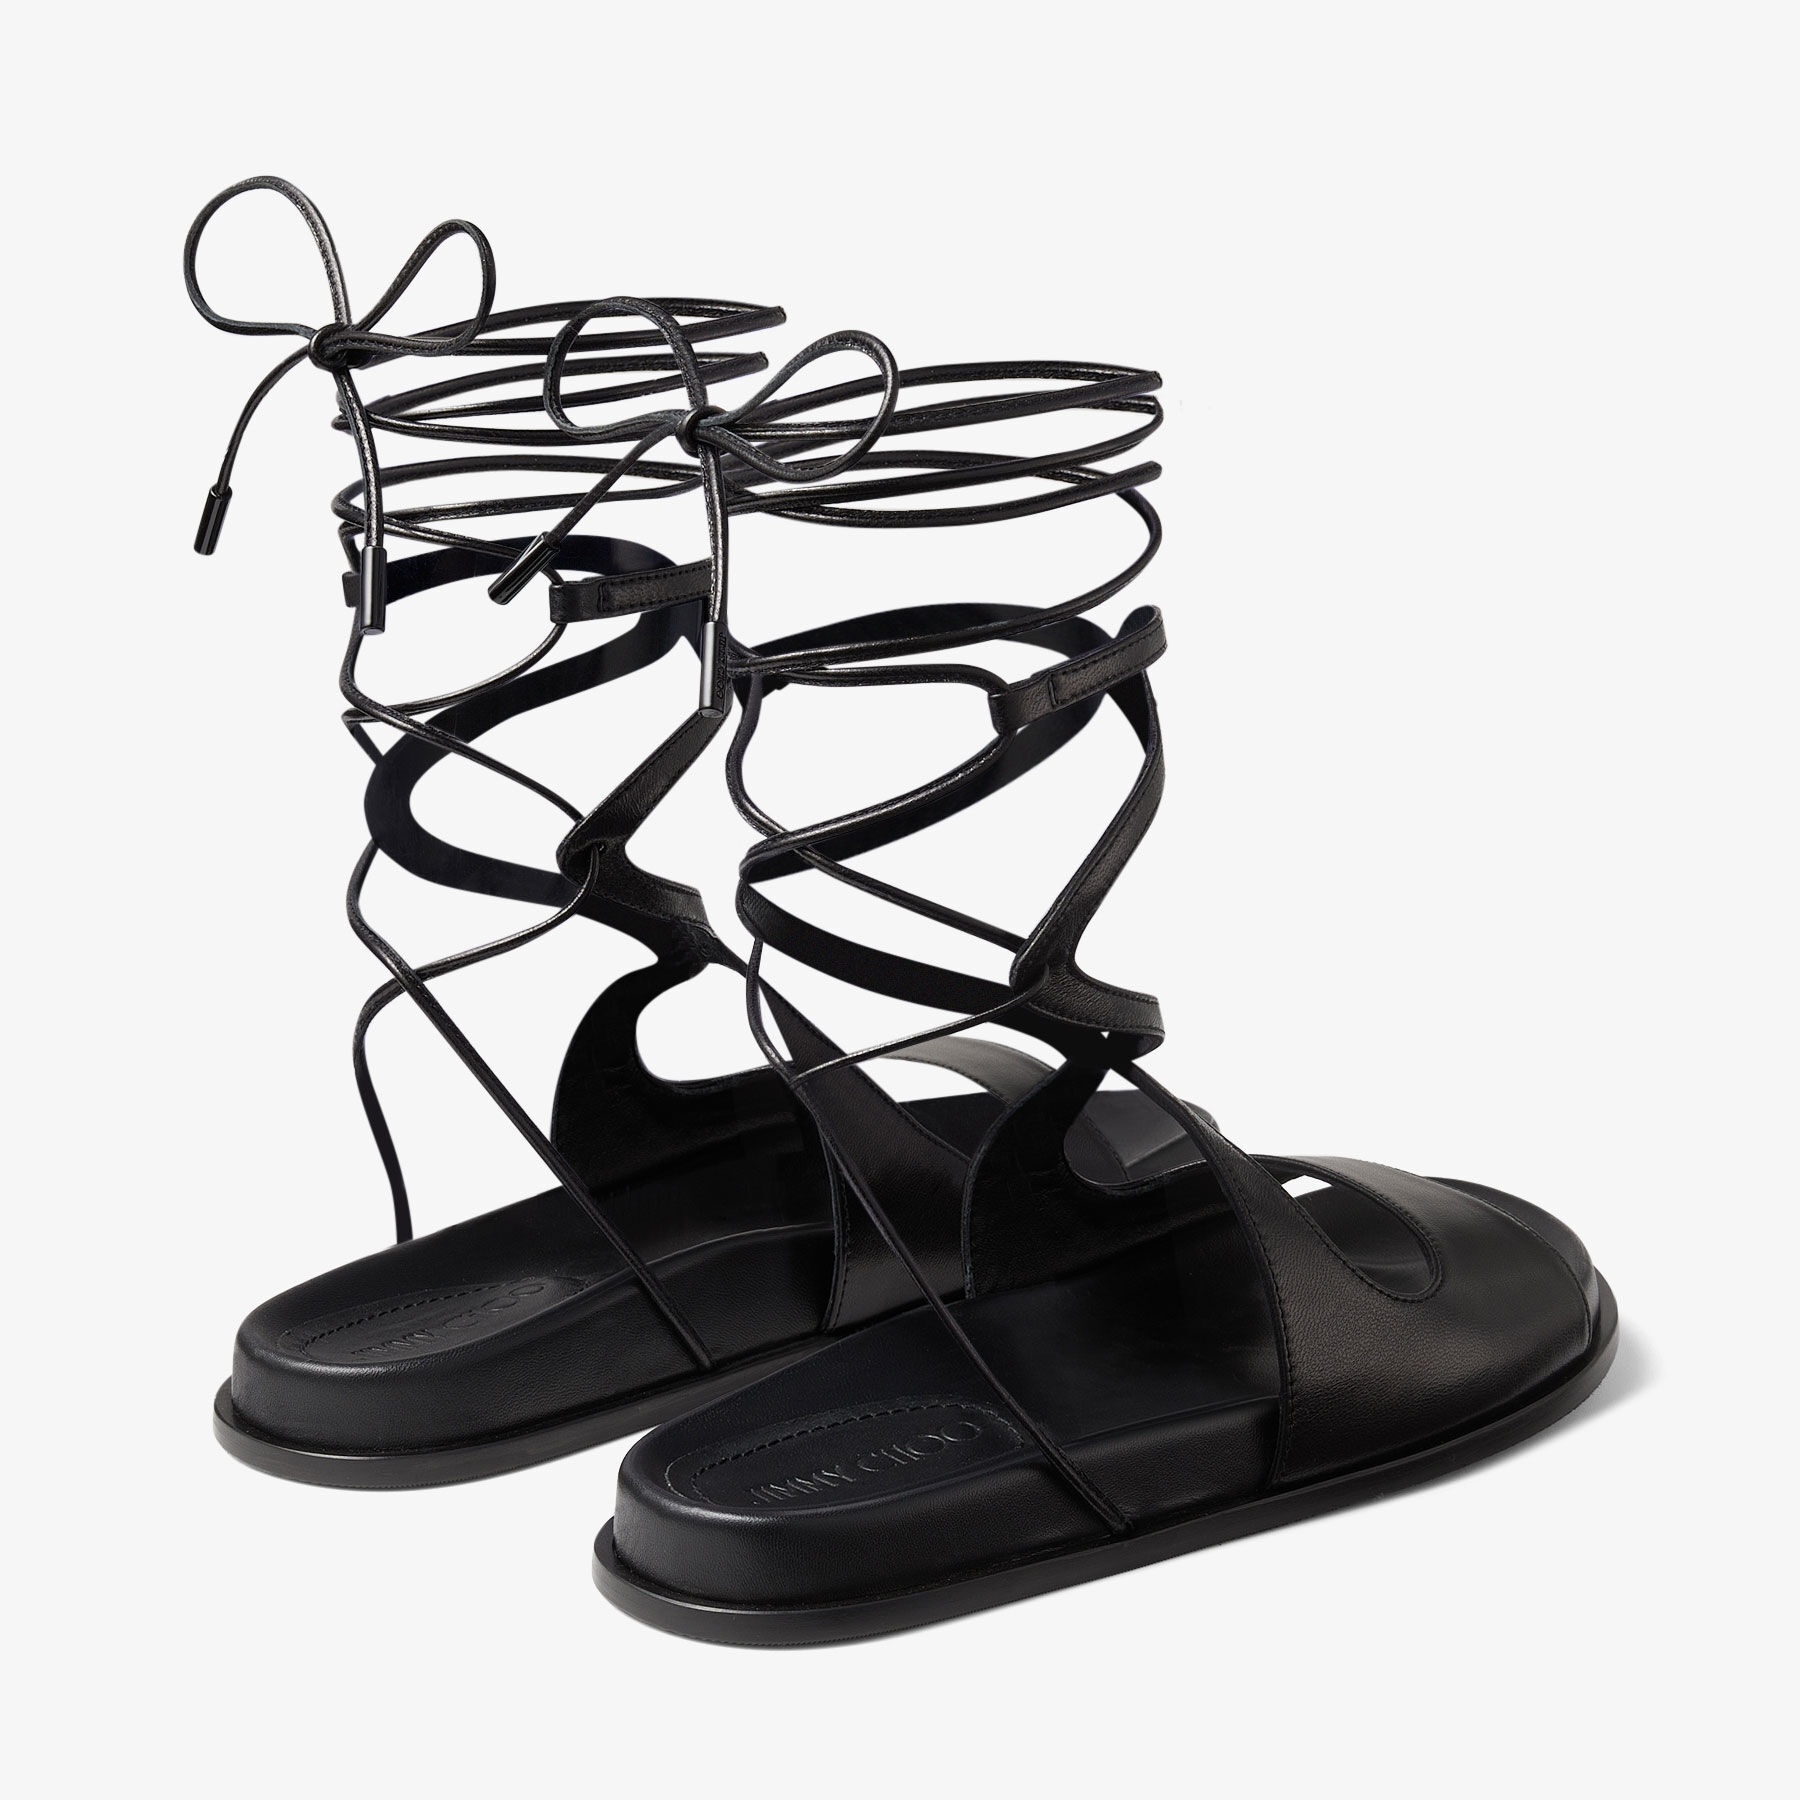 Azure Flat
Black Nappa Leather Flat Sandals - 6